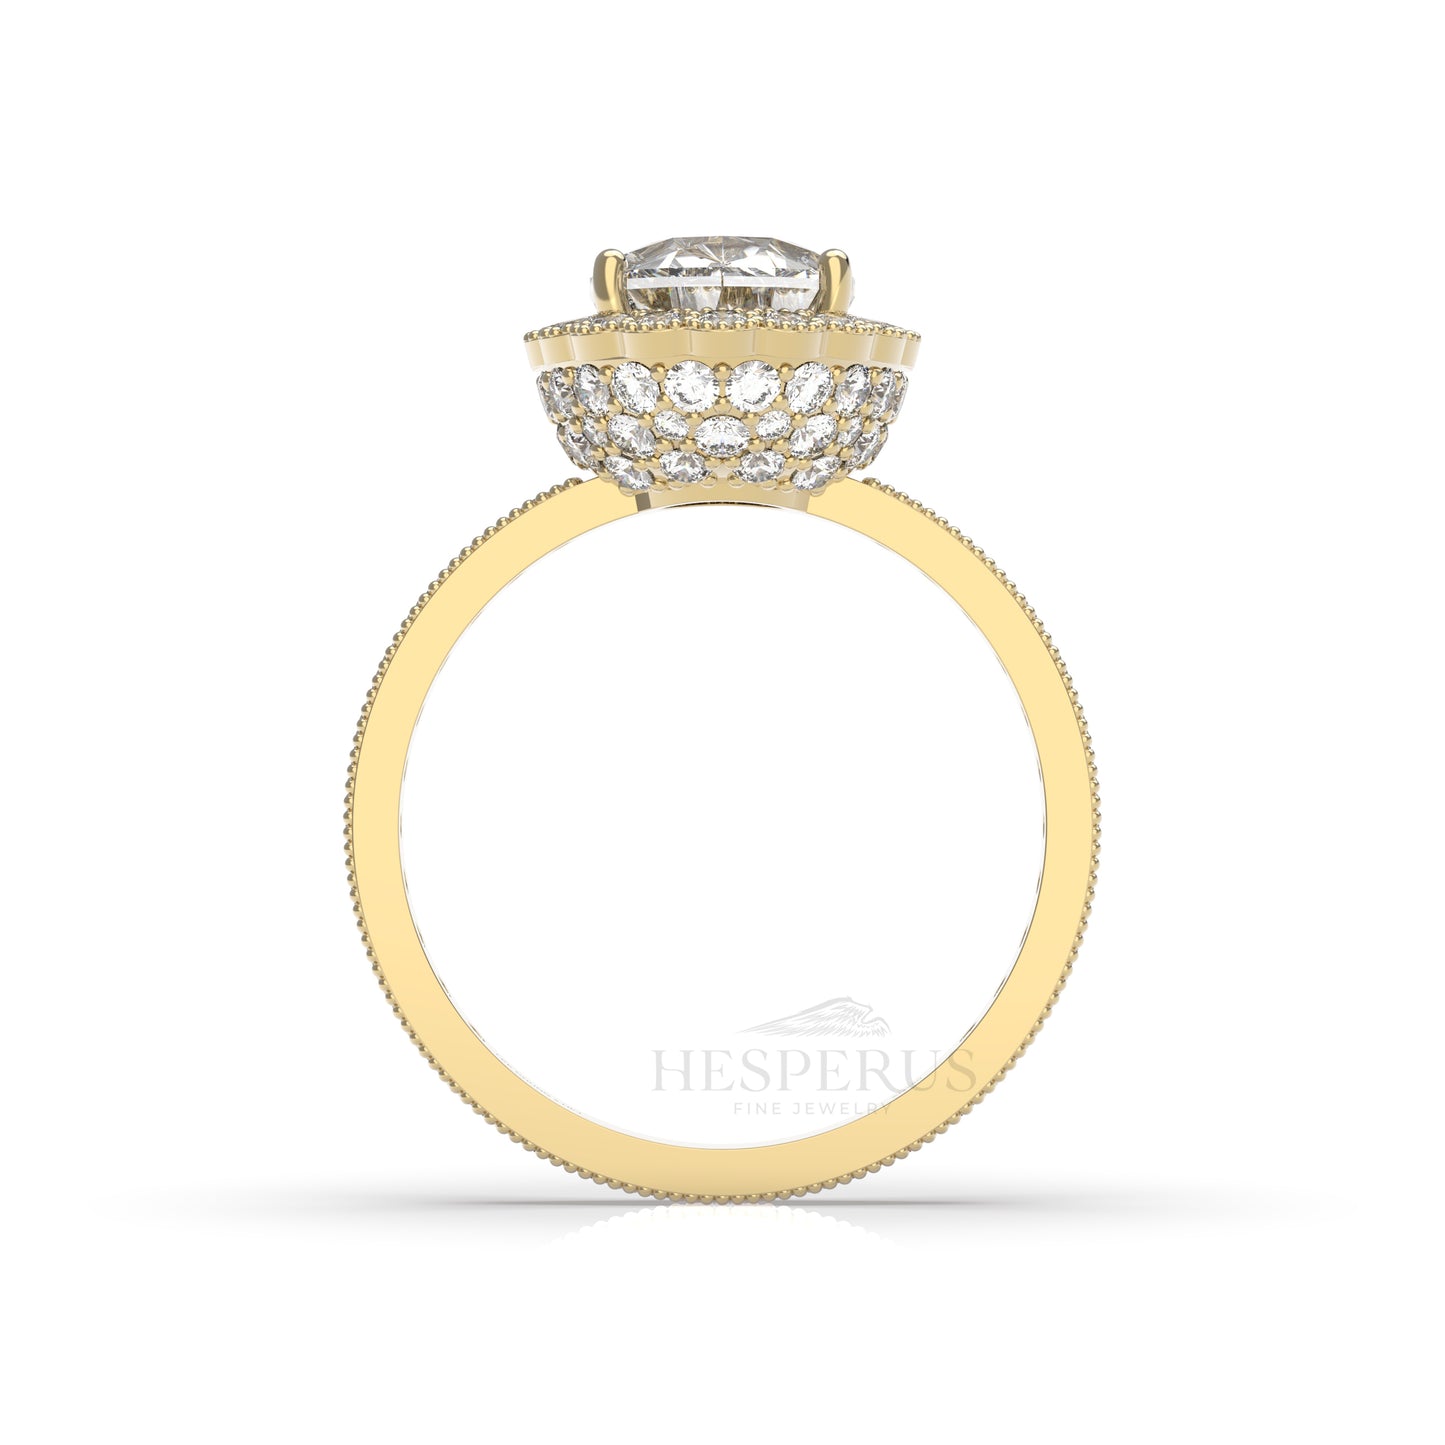 Dahlia Ring-Hesperus Fine Jewelry